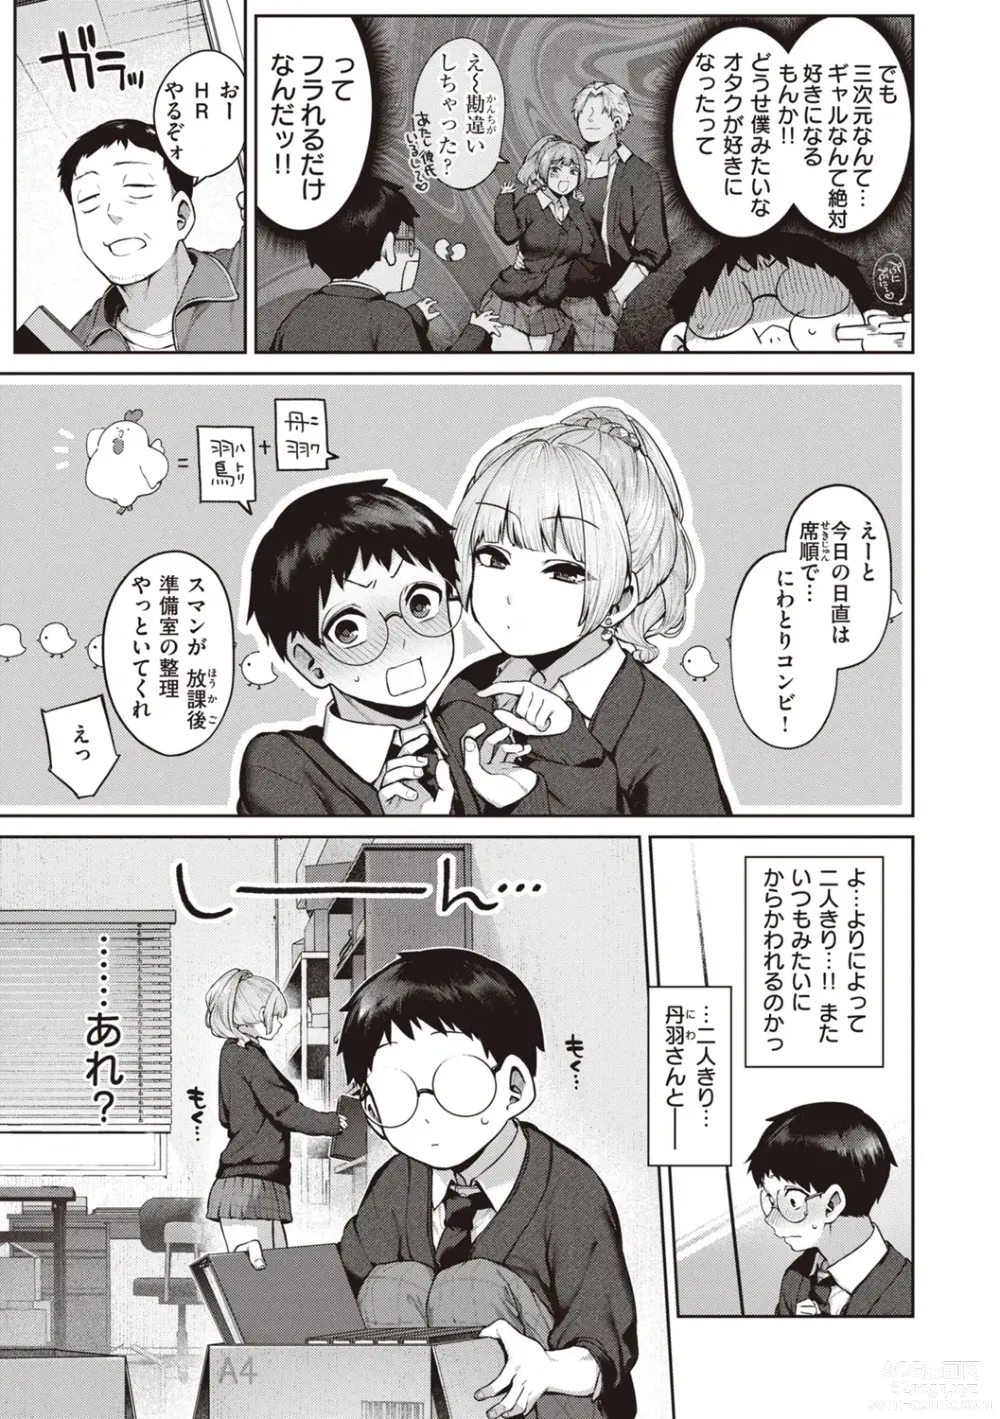 Page 7 of manga DA-DA-MO-RE